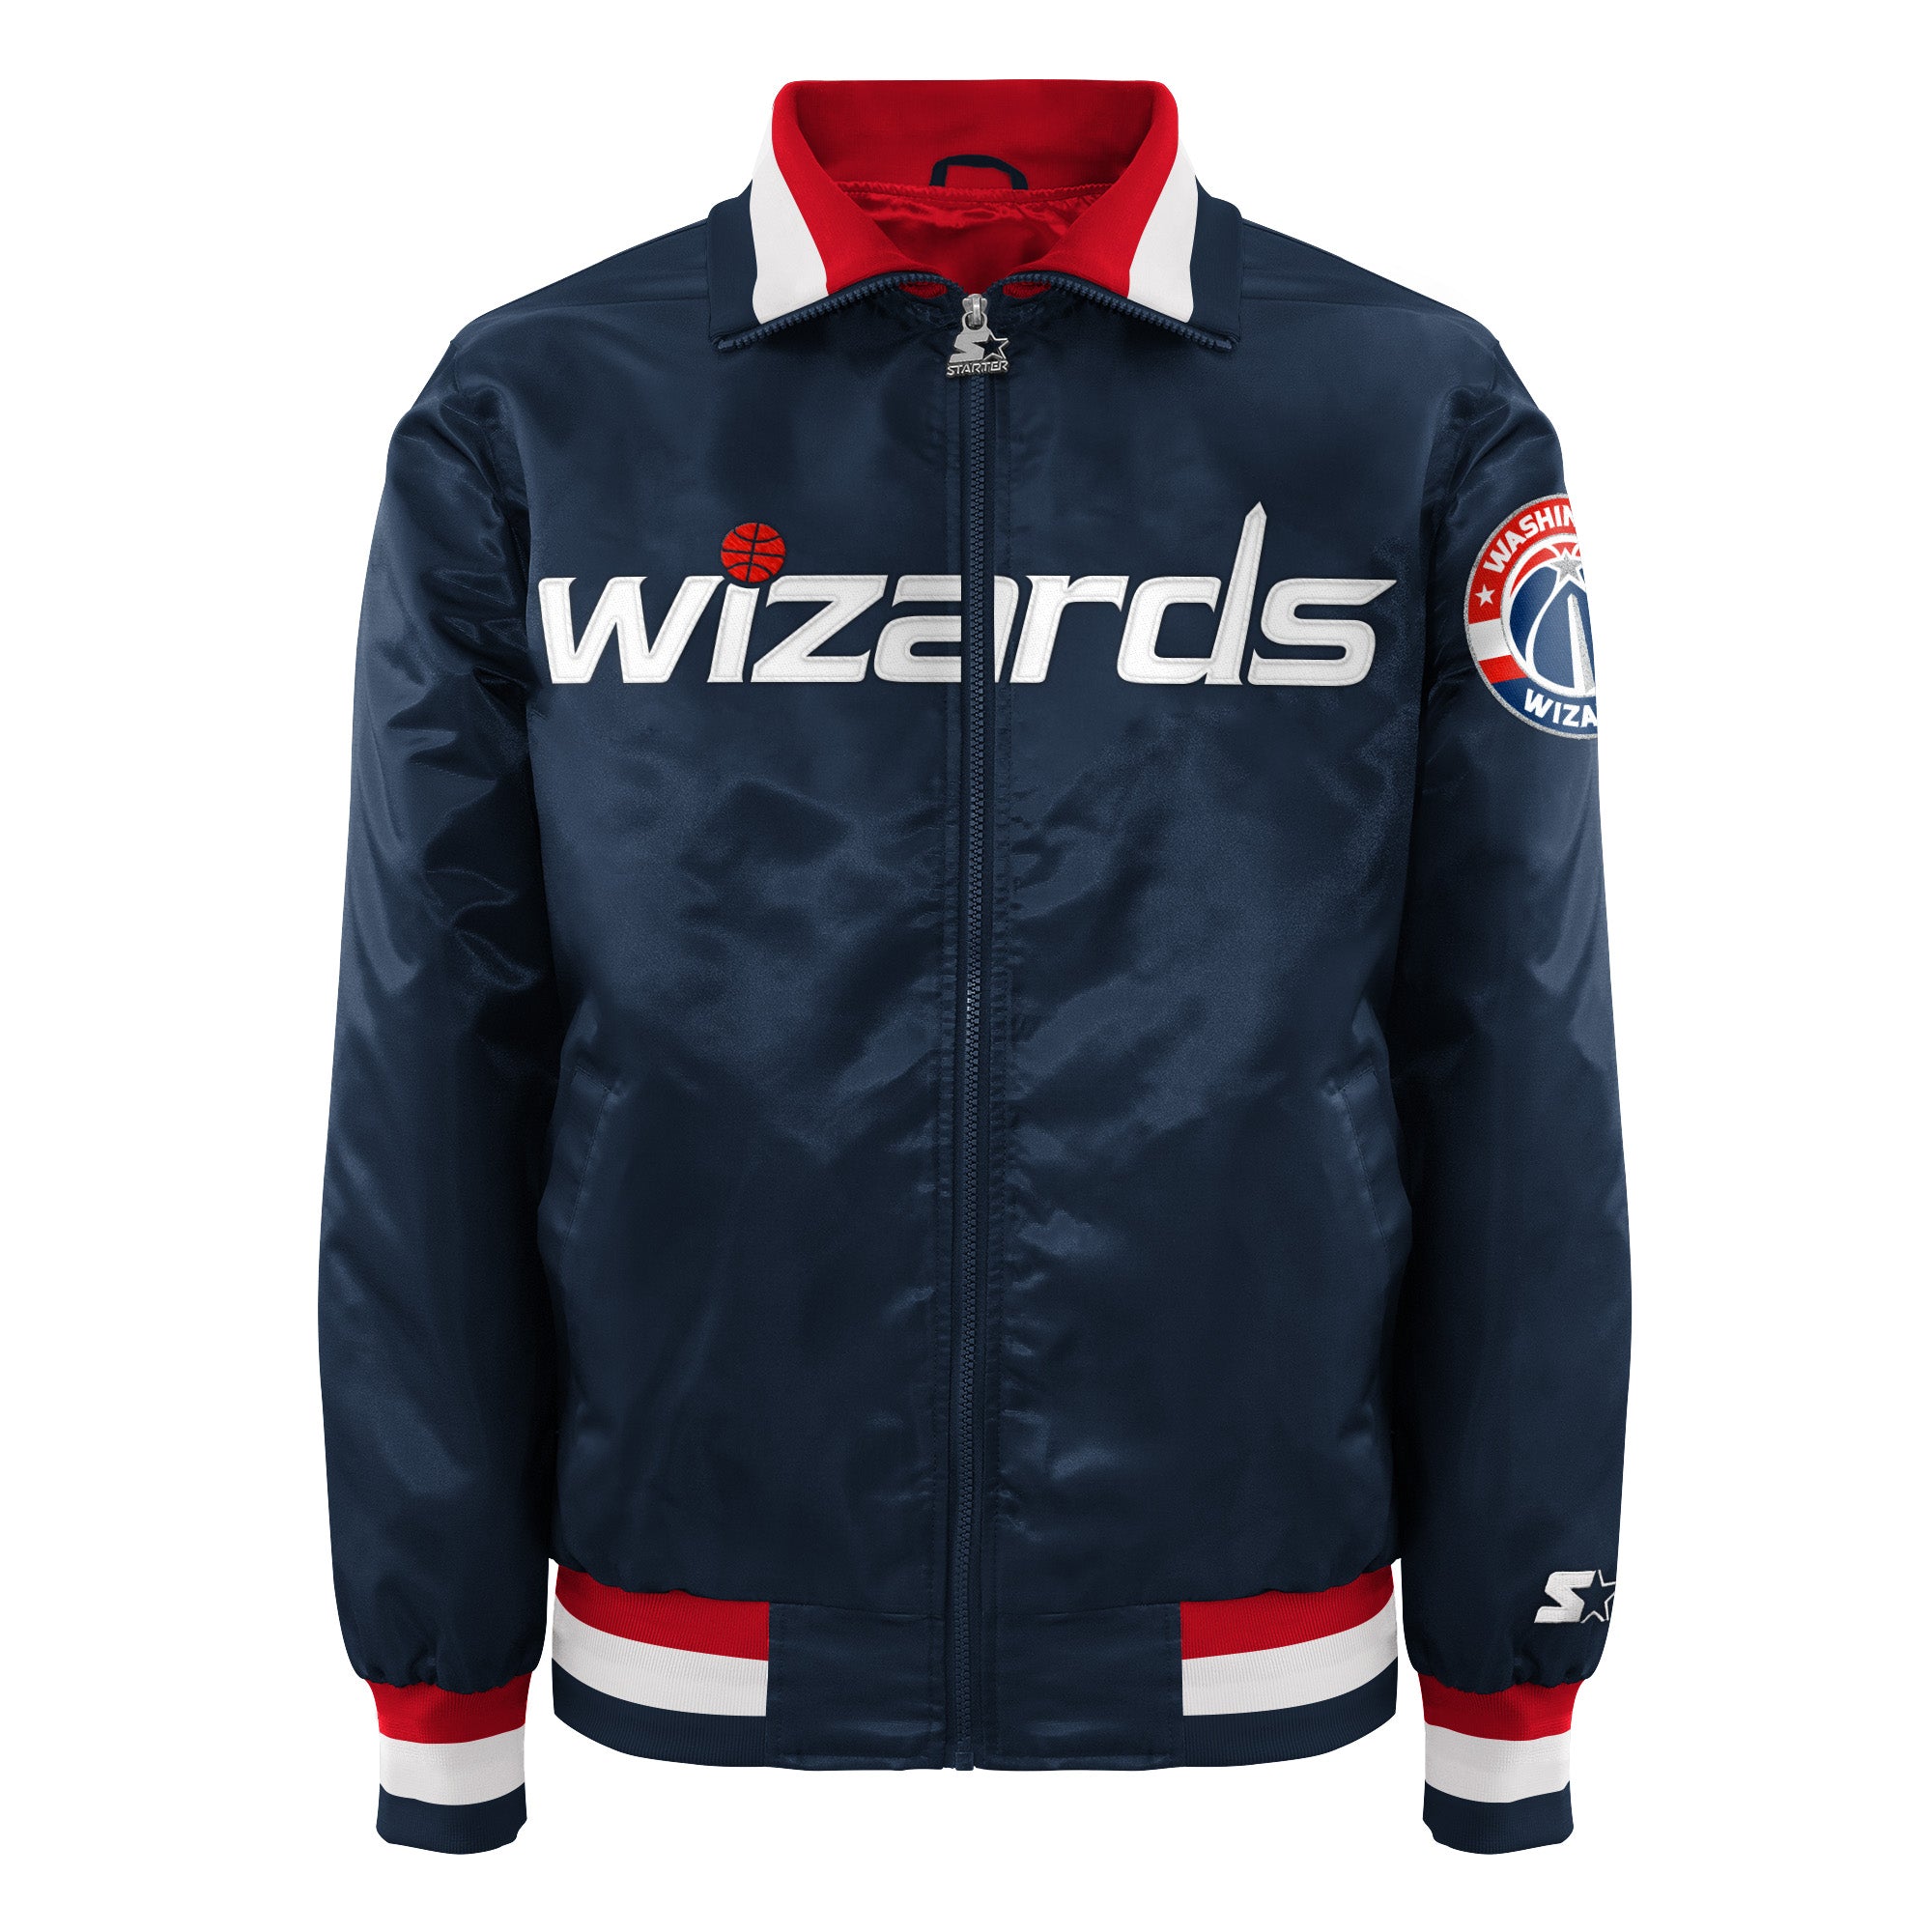 wizards starter jacket